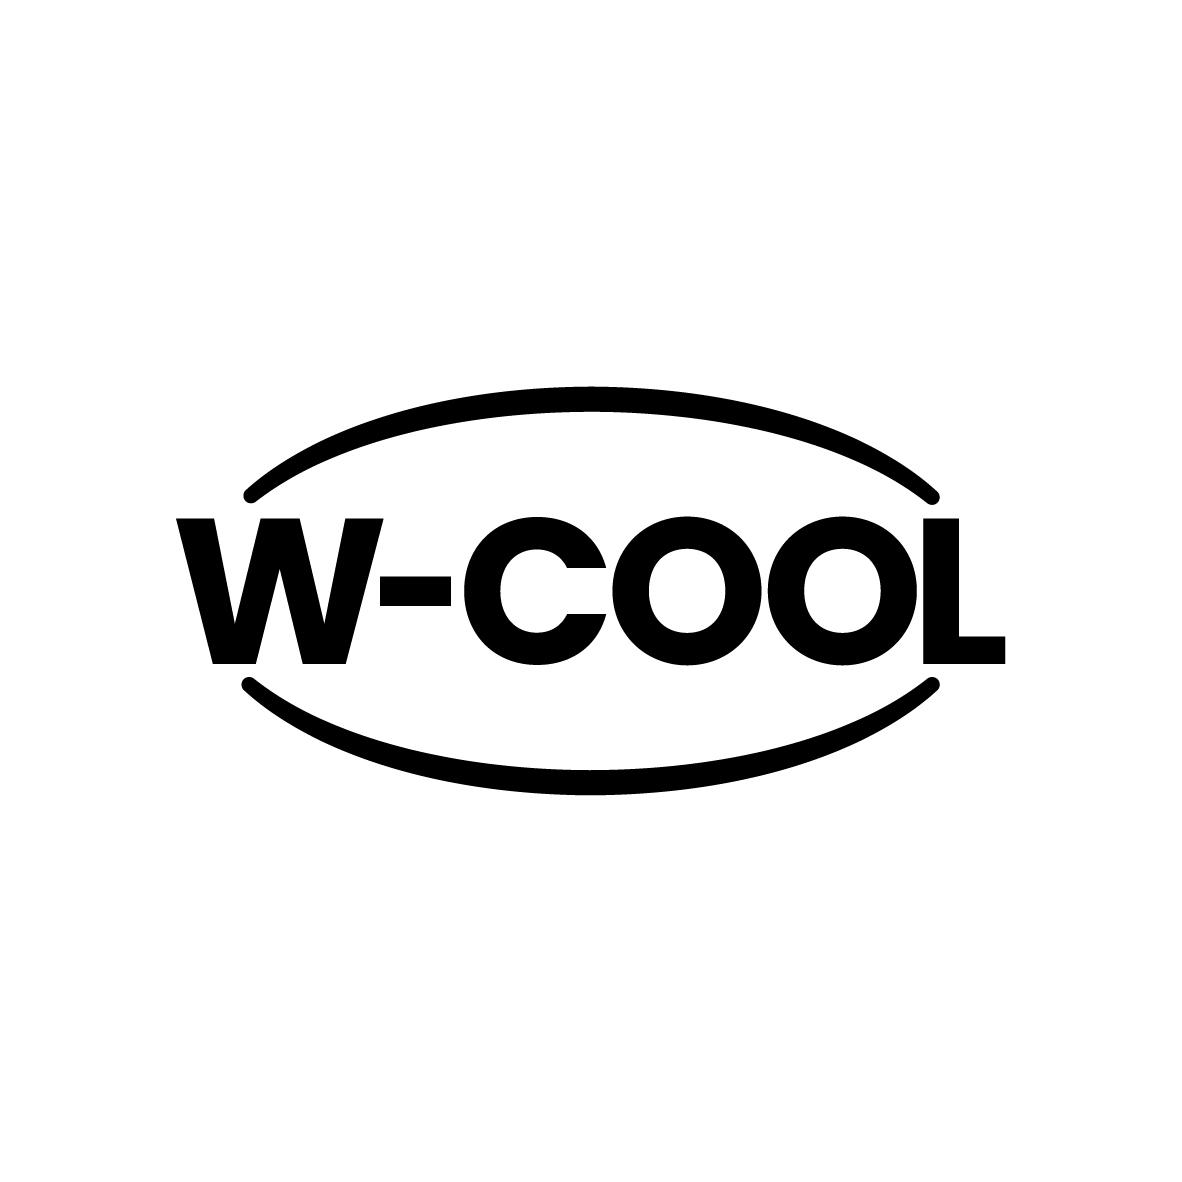 W-COOL